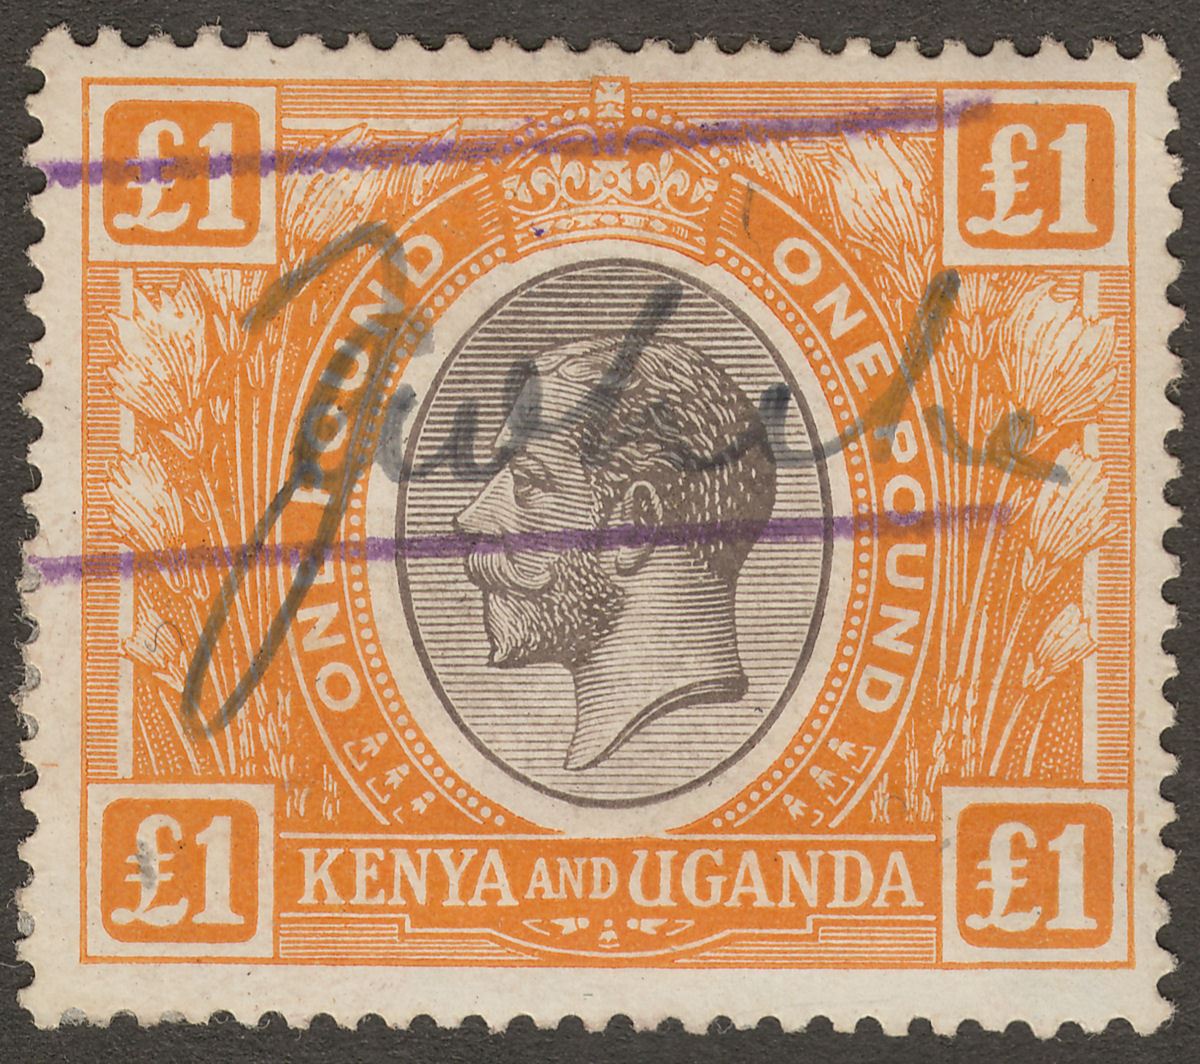 Kenya and Uganda 1922 KGV £1 Black + Orange Fiscal Used SG95 cat £325 as postal